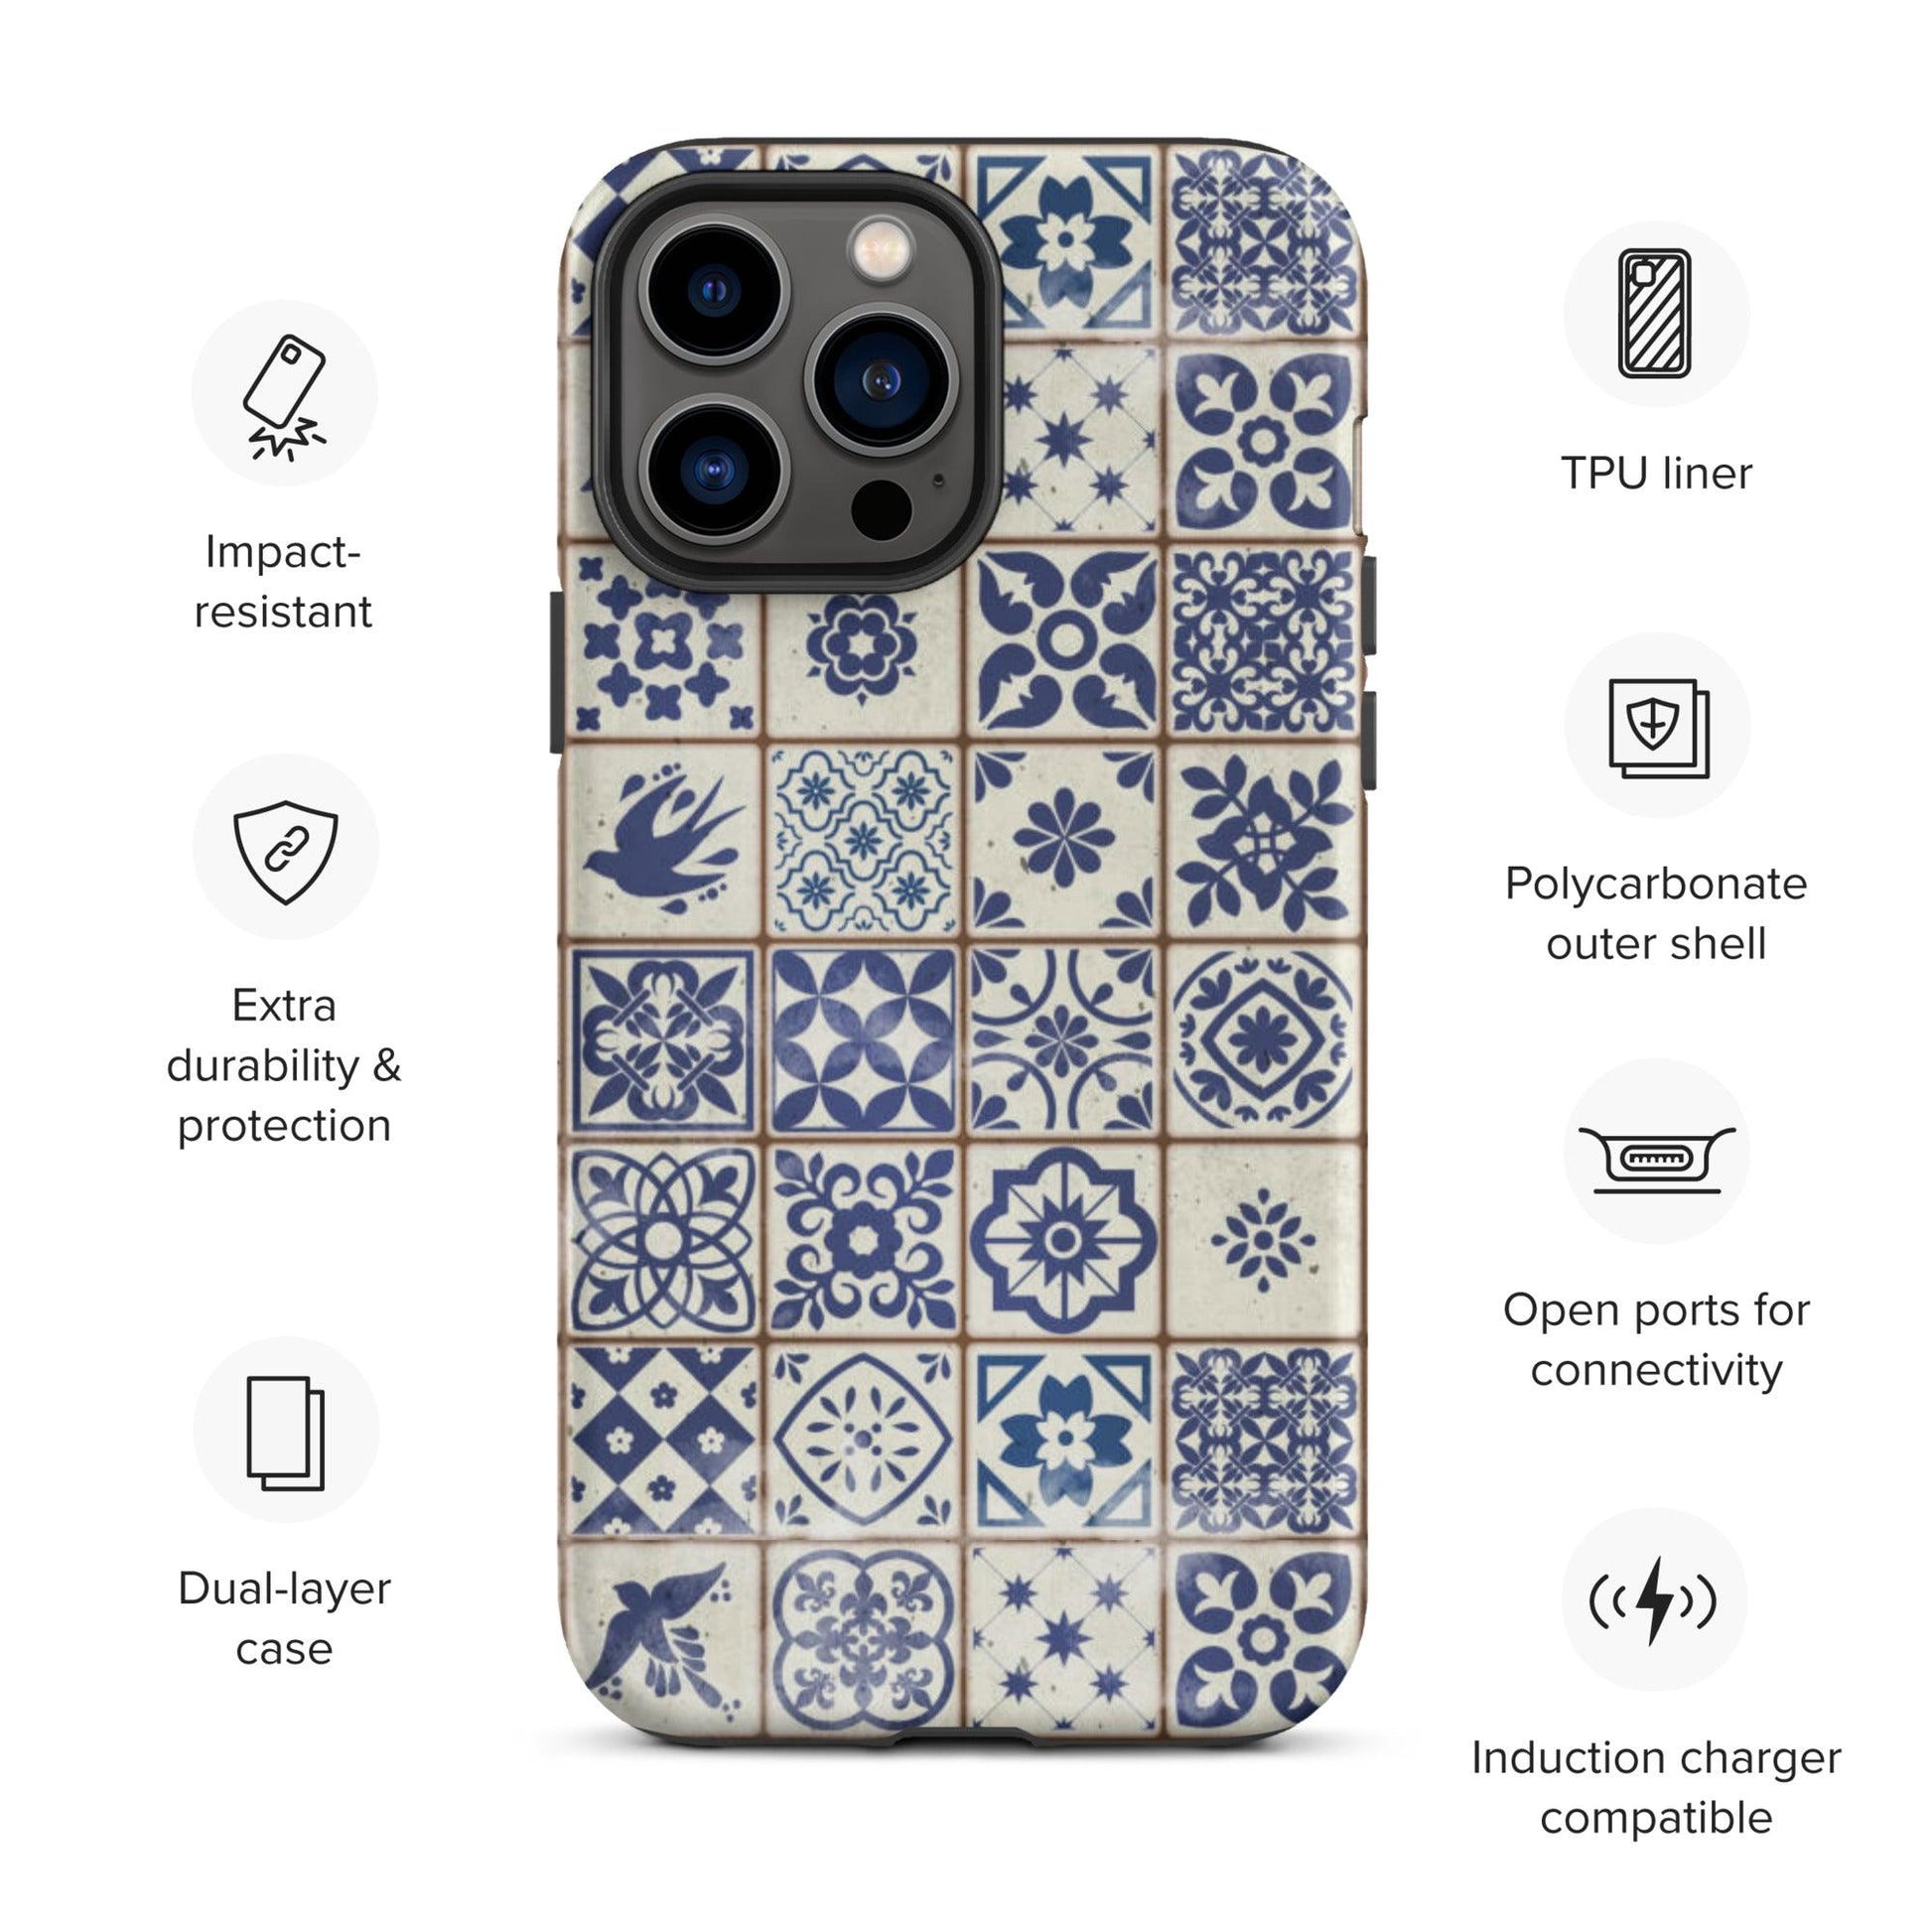 Portuguese Tile Tough iPhone Case - The Global Wanderer